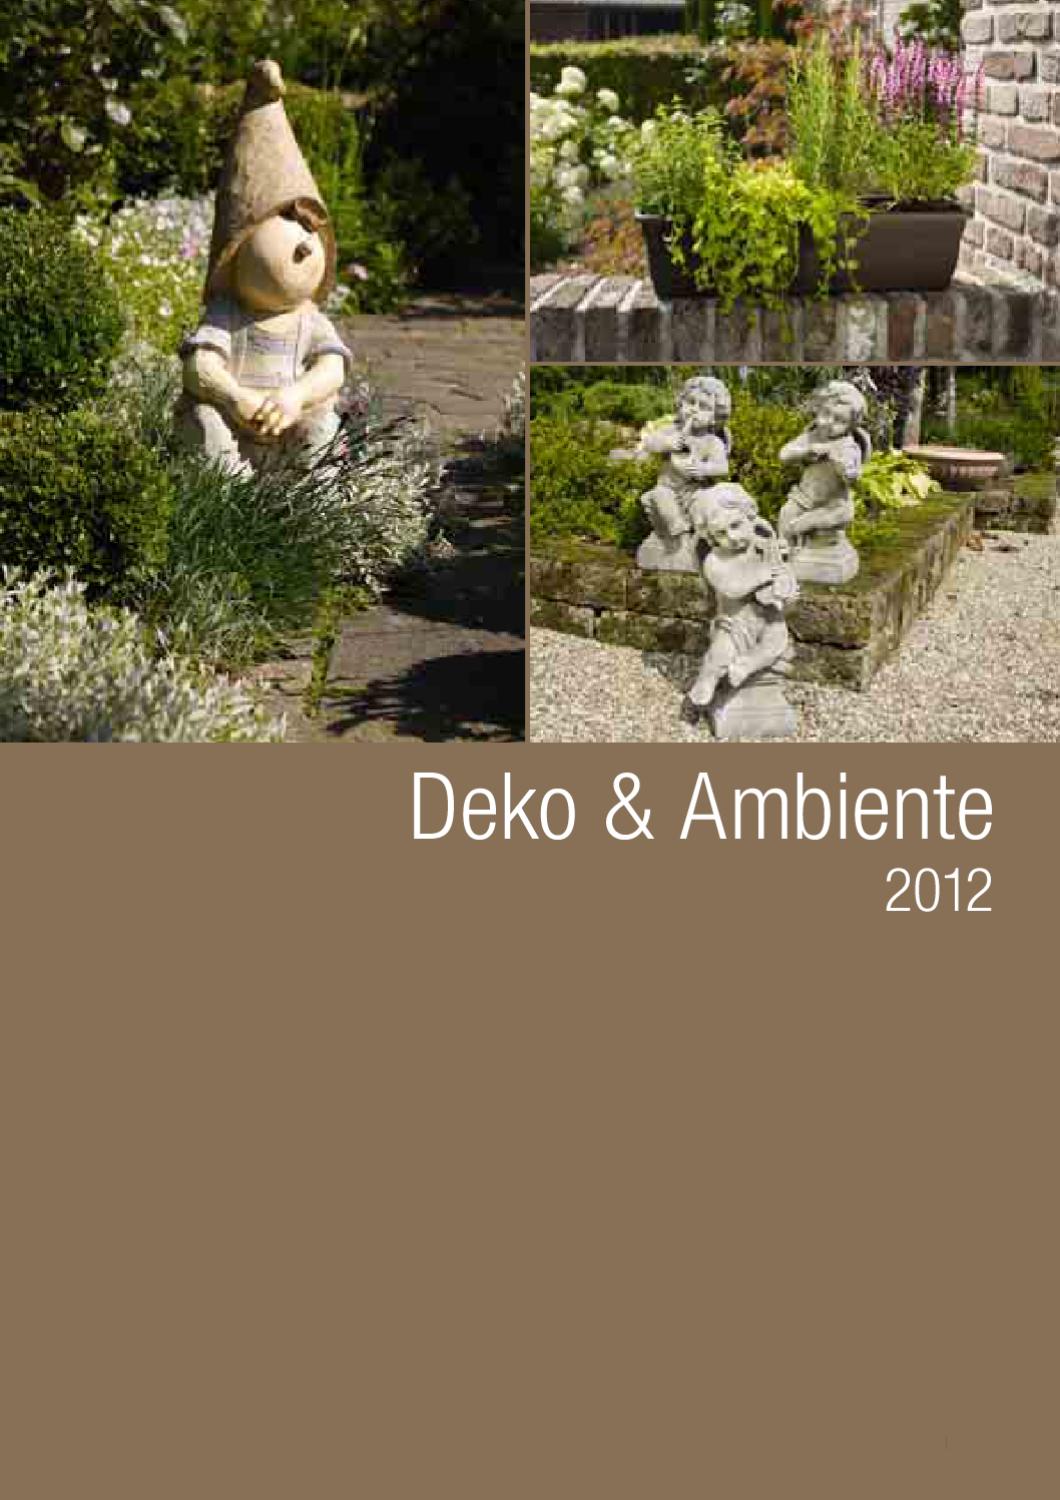 Deko Fahrrad Garten Genial Deko & Ambiente by Mats andersson issuu